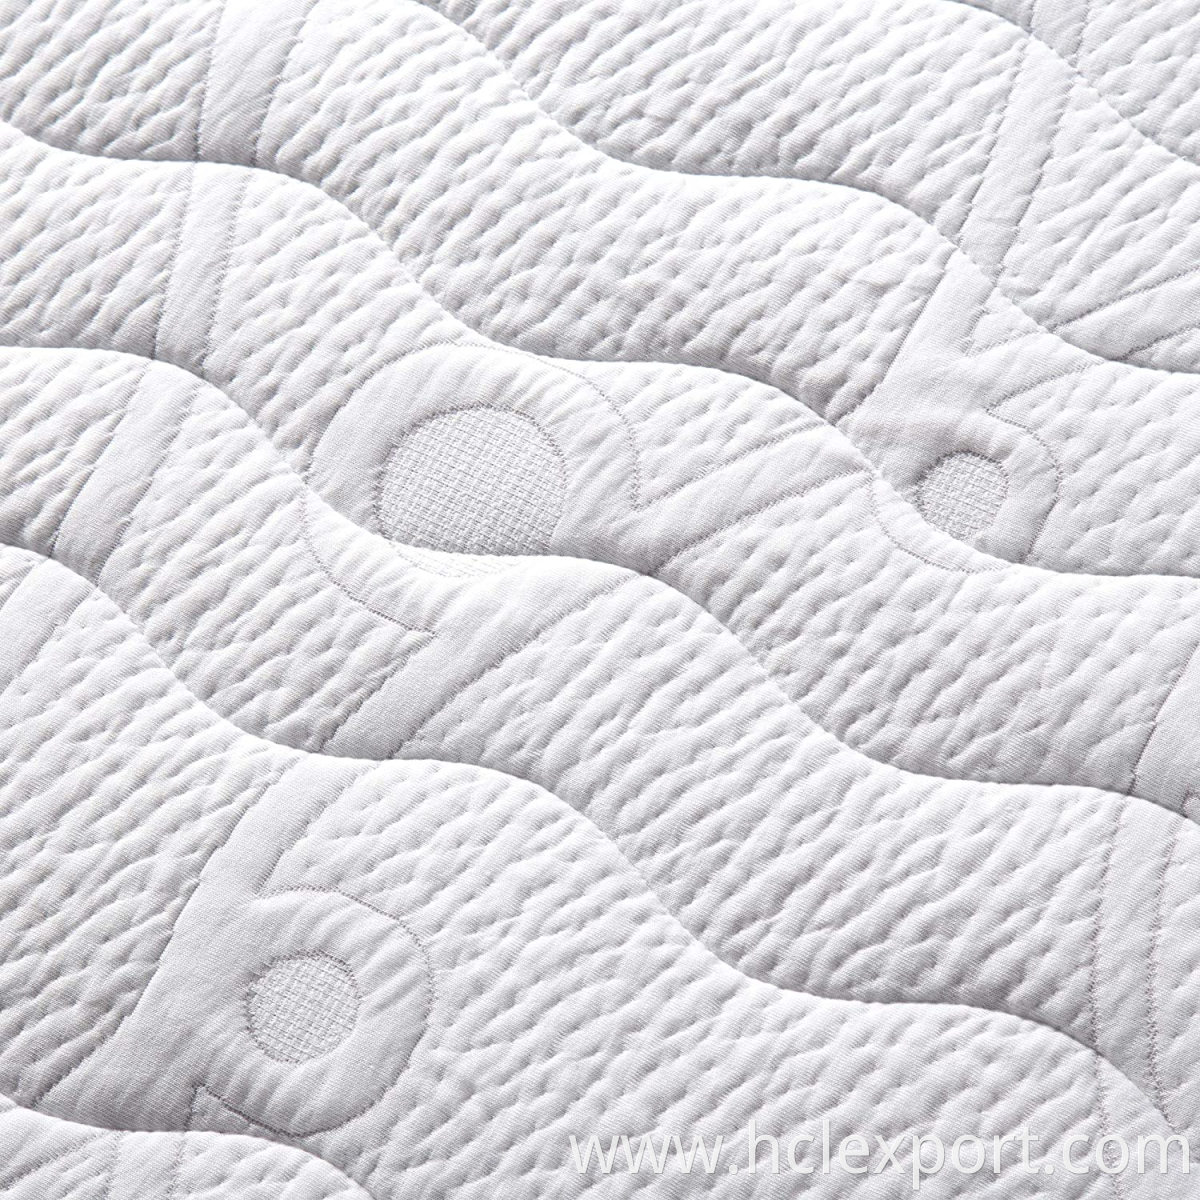 Hybrid sleep well king queen twin double size waterproof mattresses cover protector pocket spring gel memory foam mattress